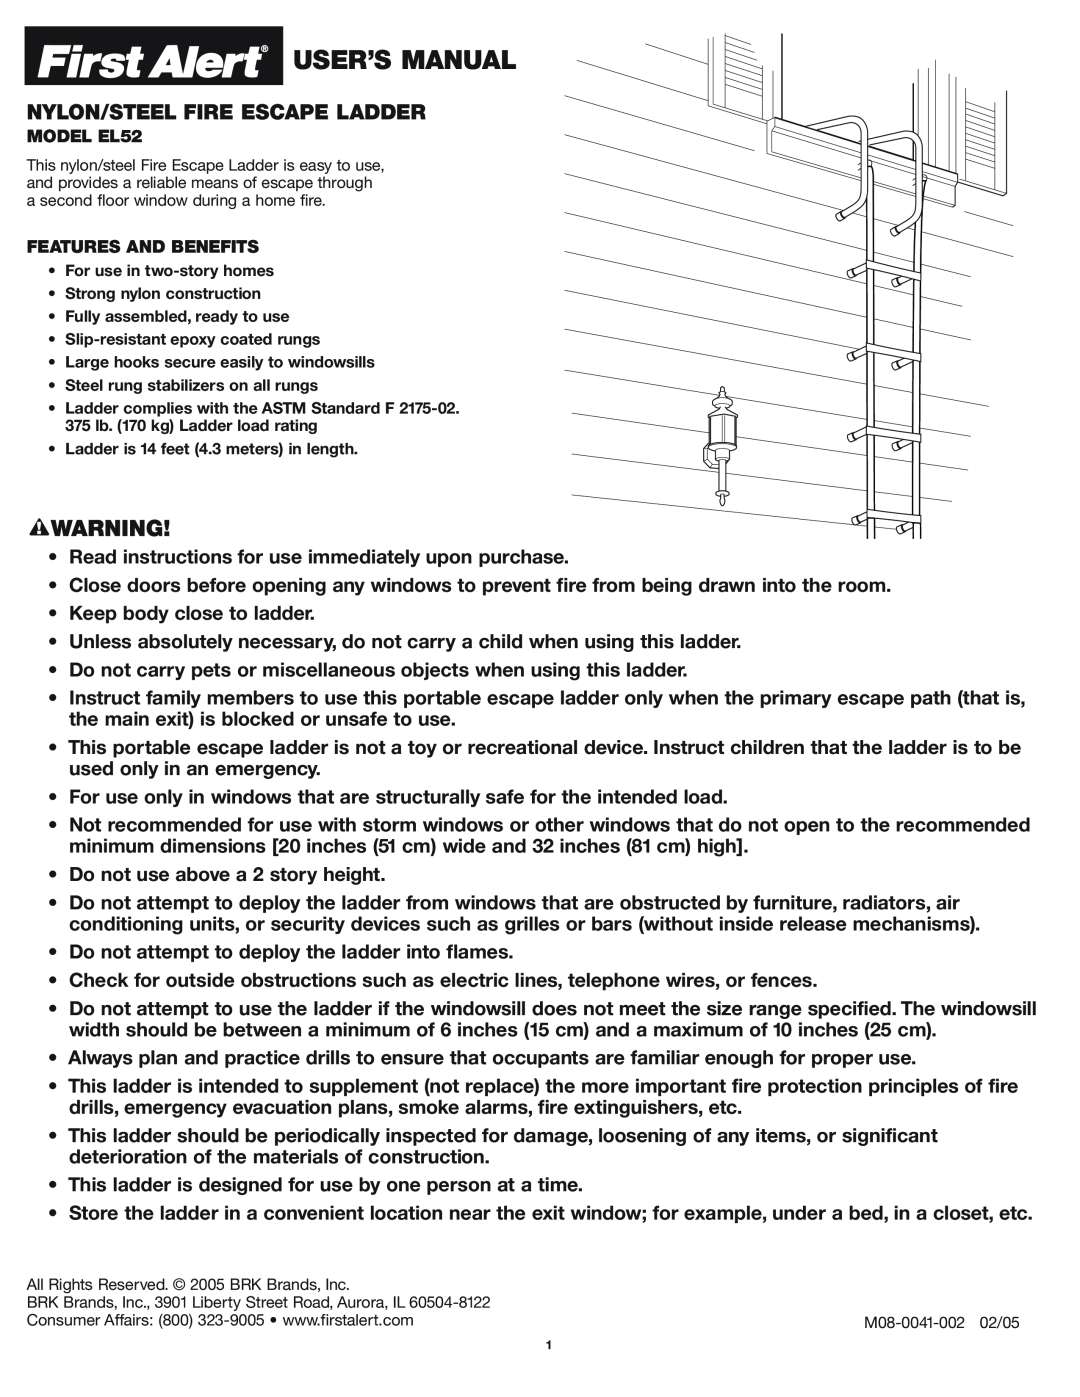 First Alert EL52 user manual Nylon/Steel Fire Escape Ladder 